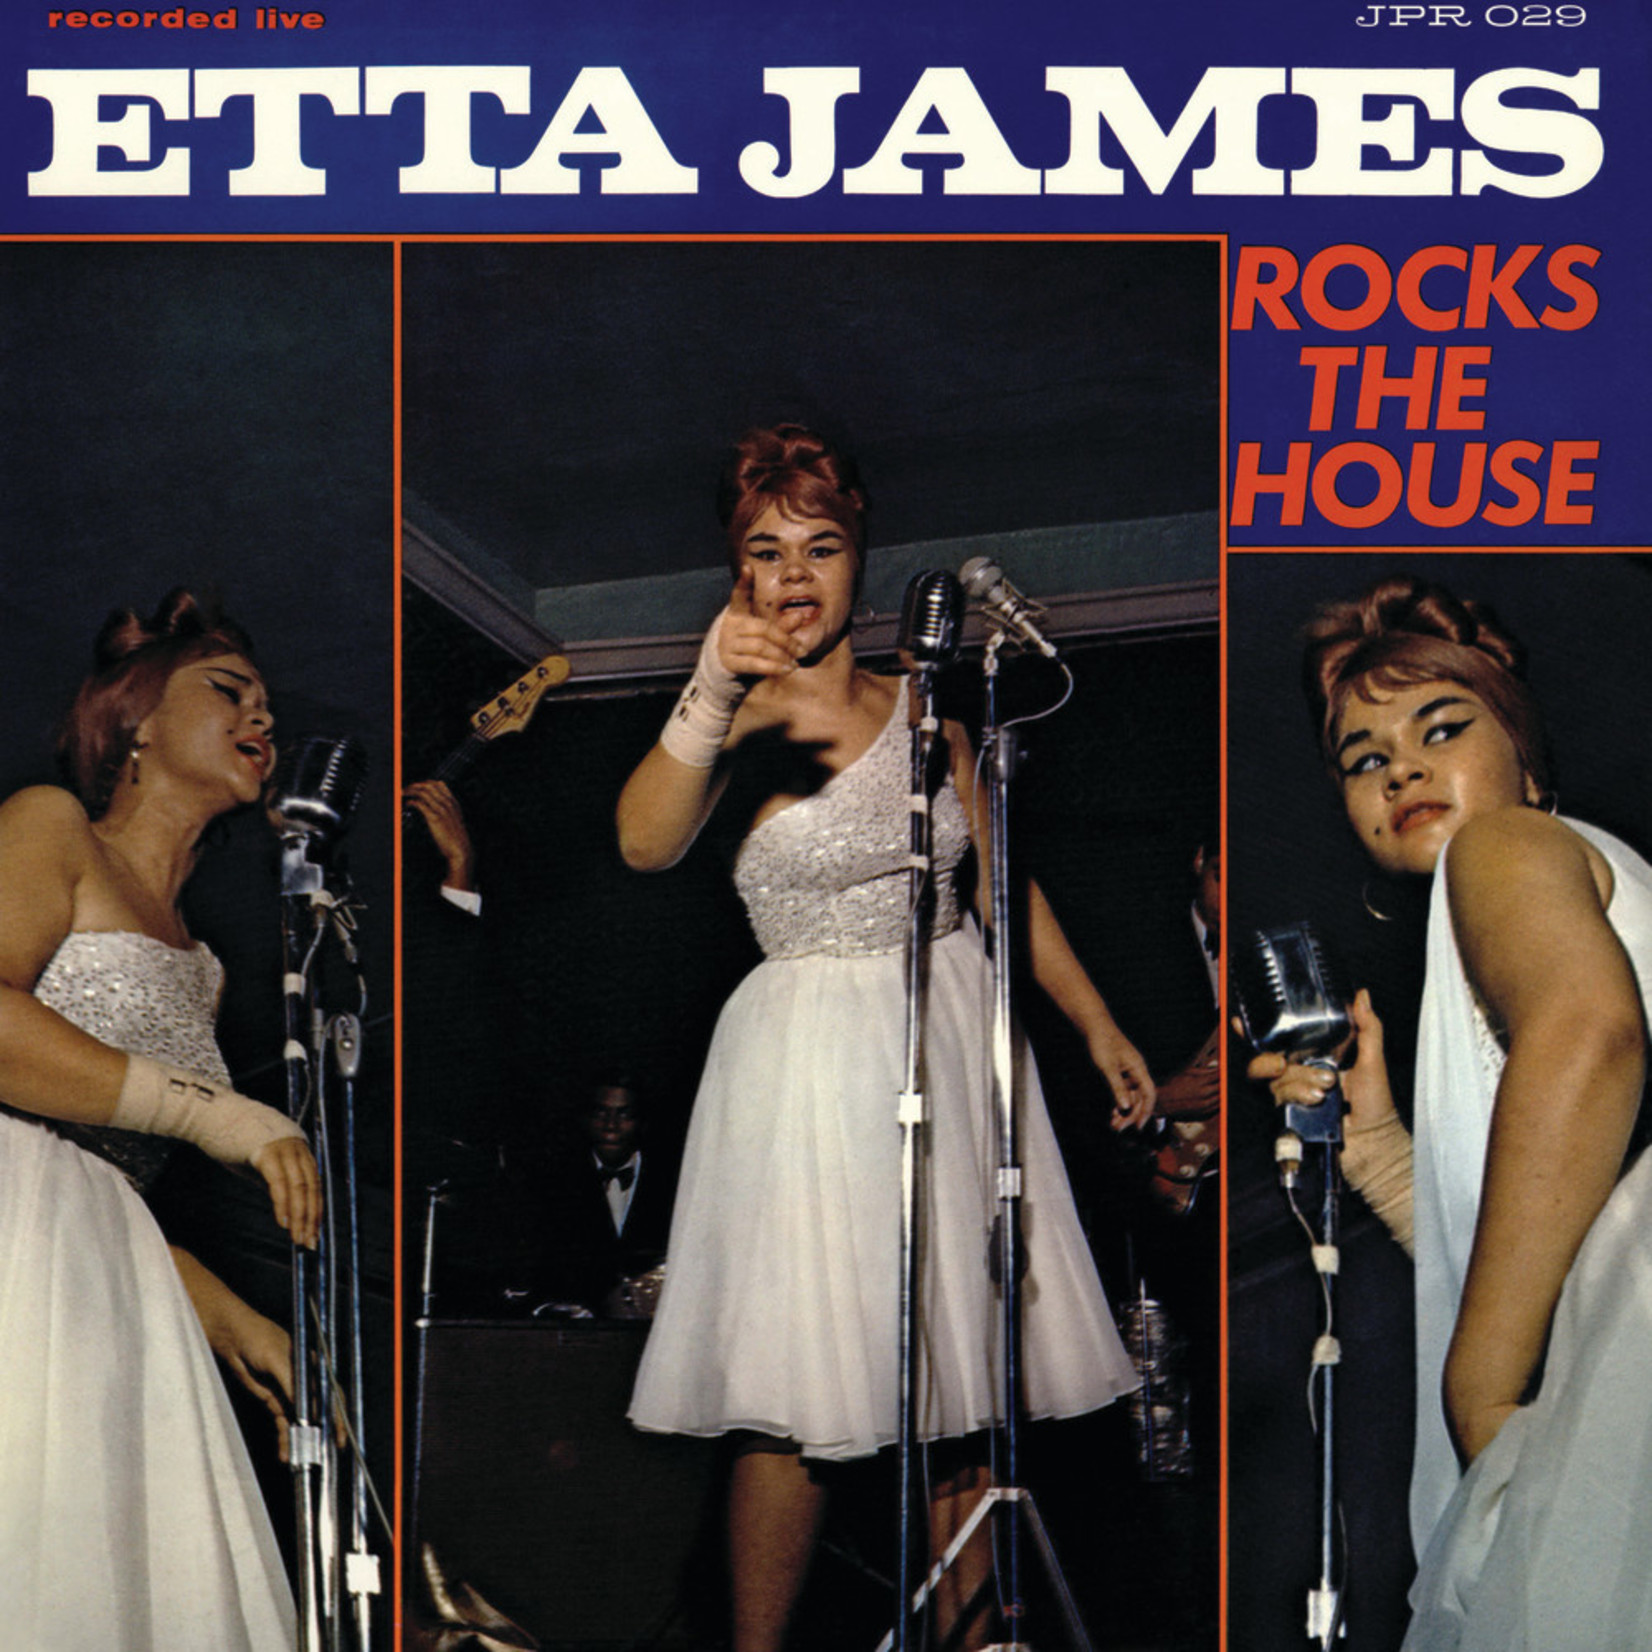 [New] Etta James - Etta James Rocks The House